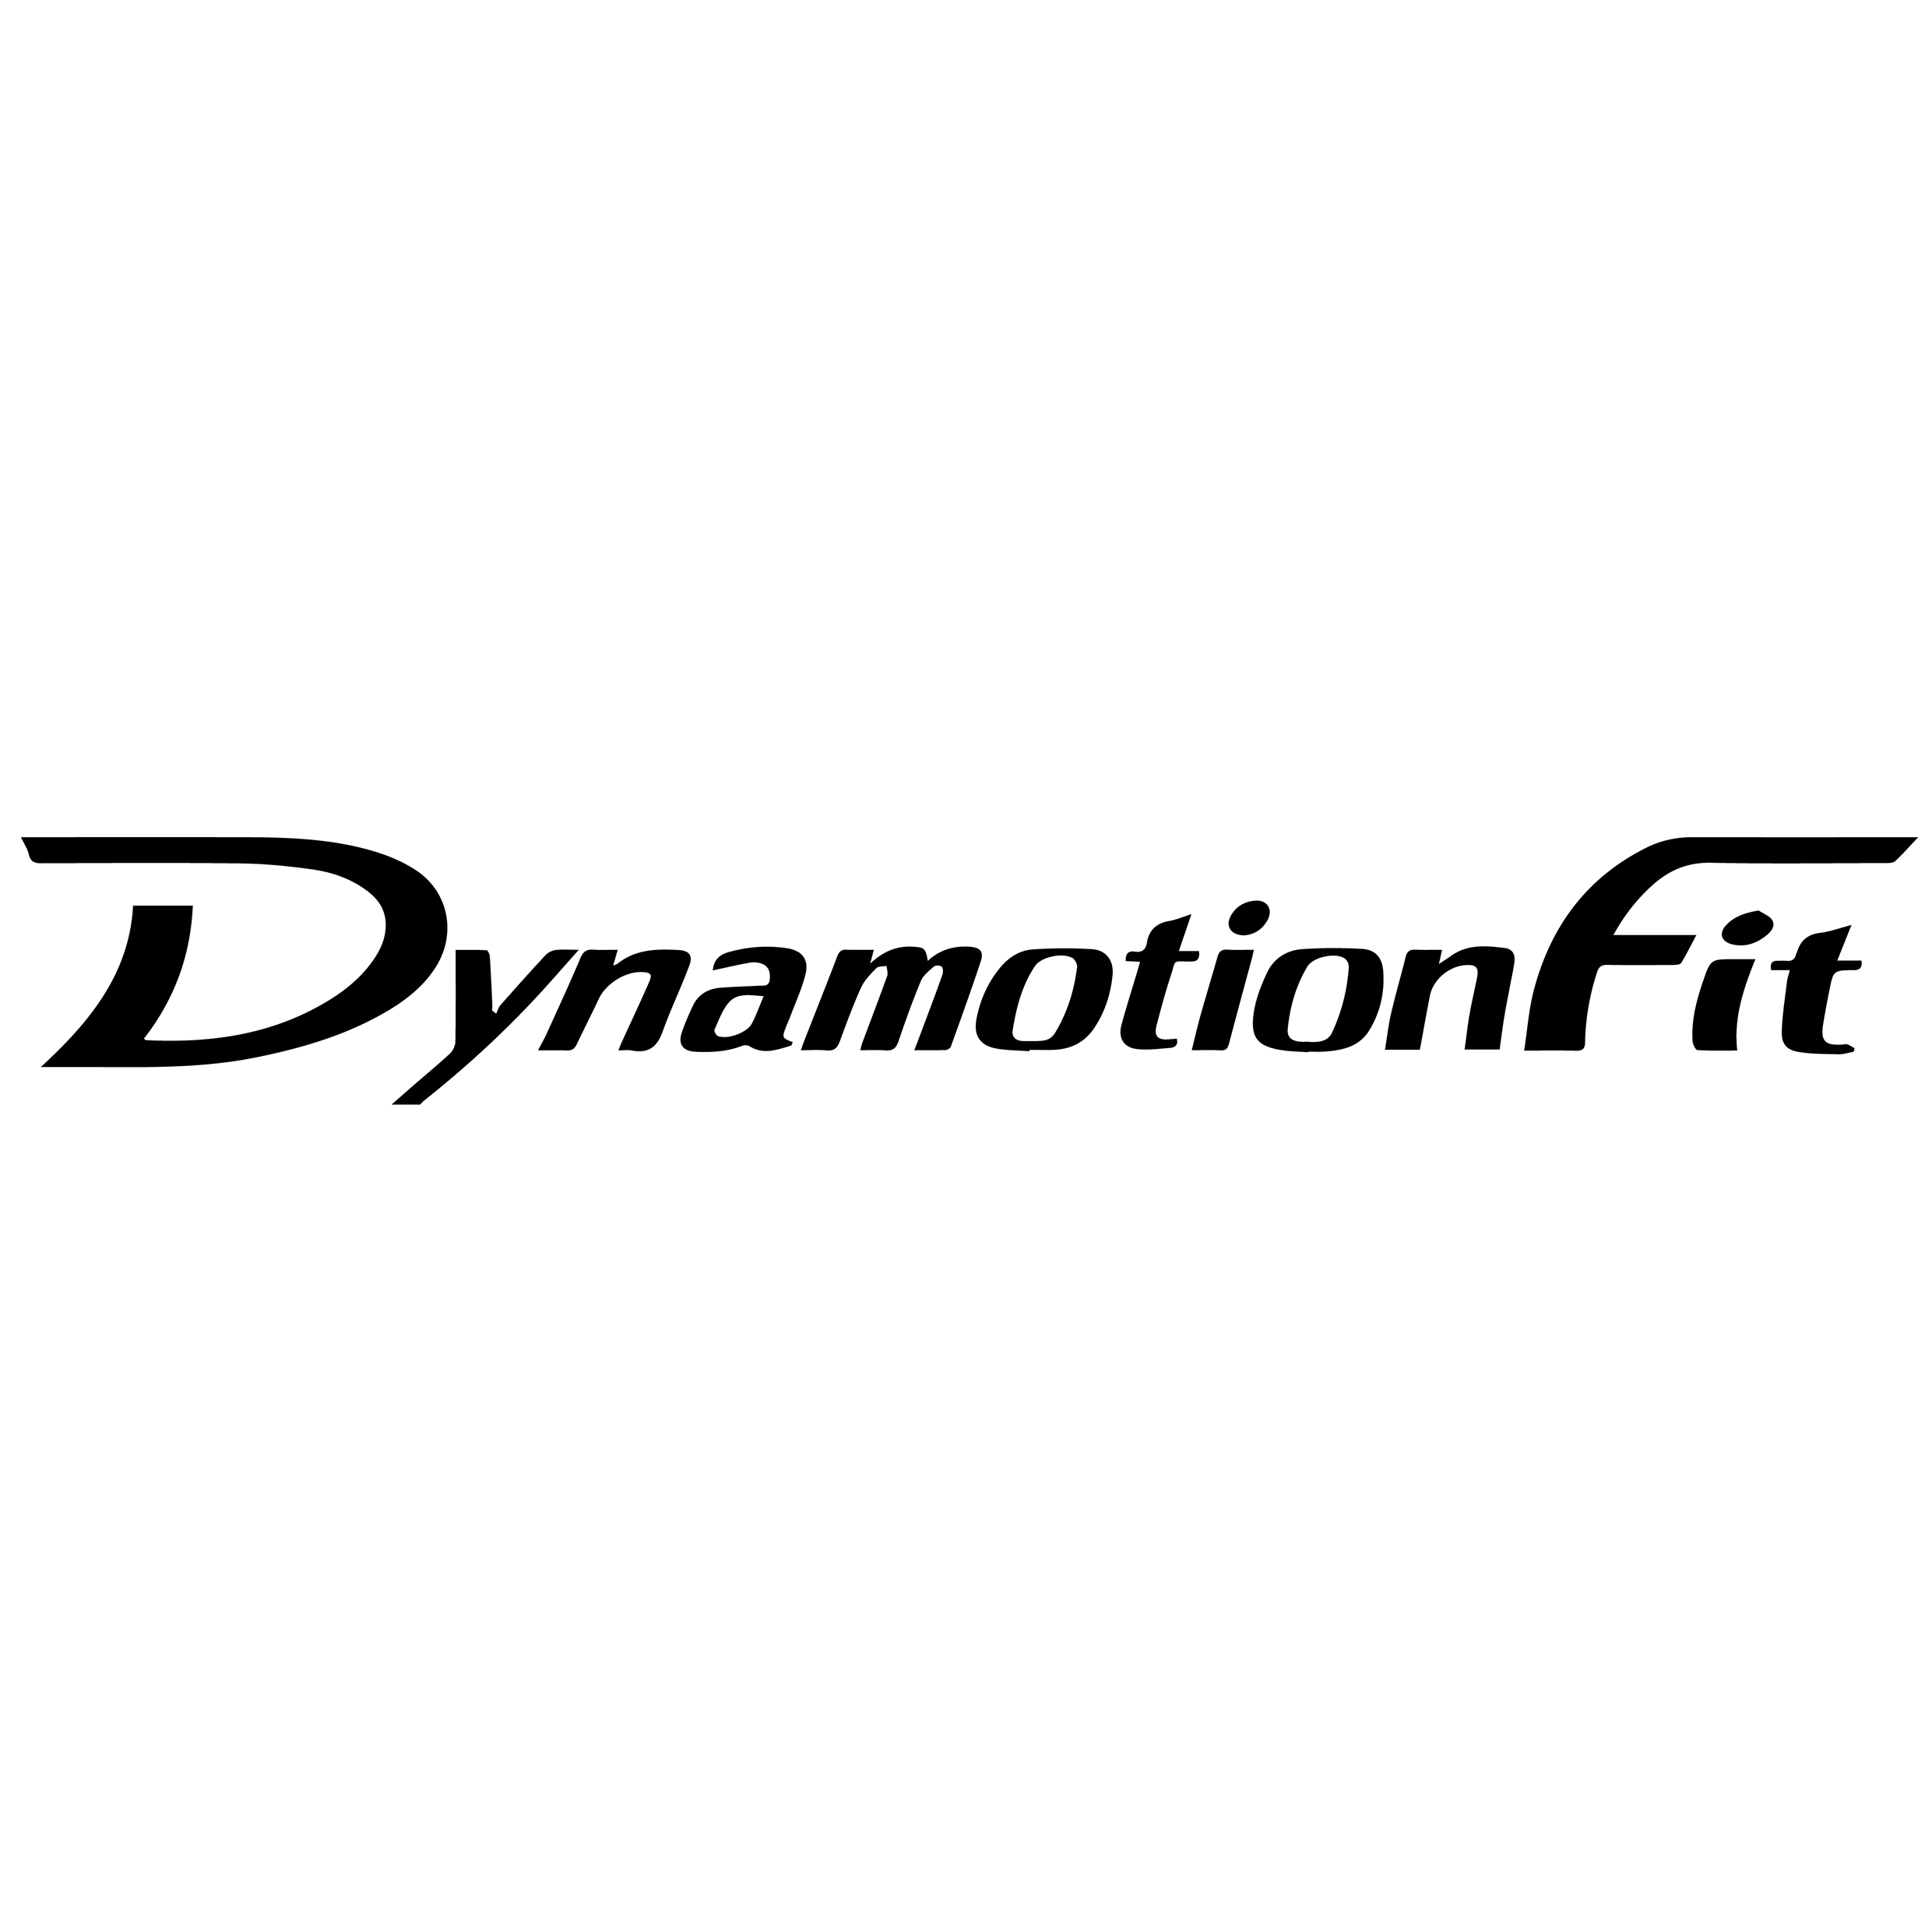 DynamotionFit